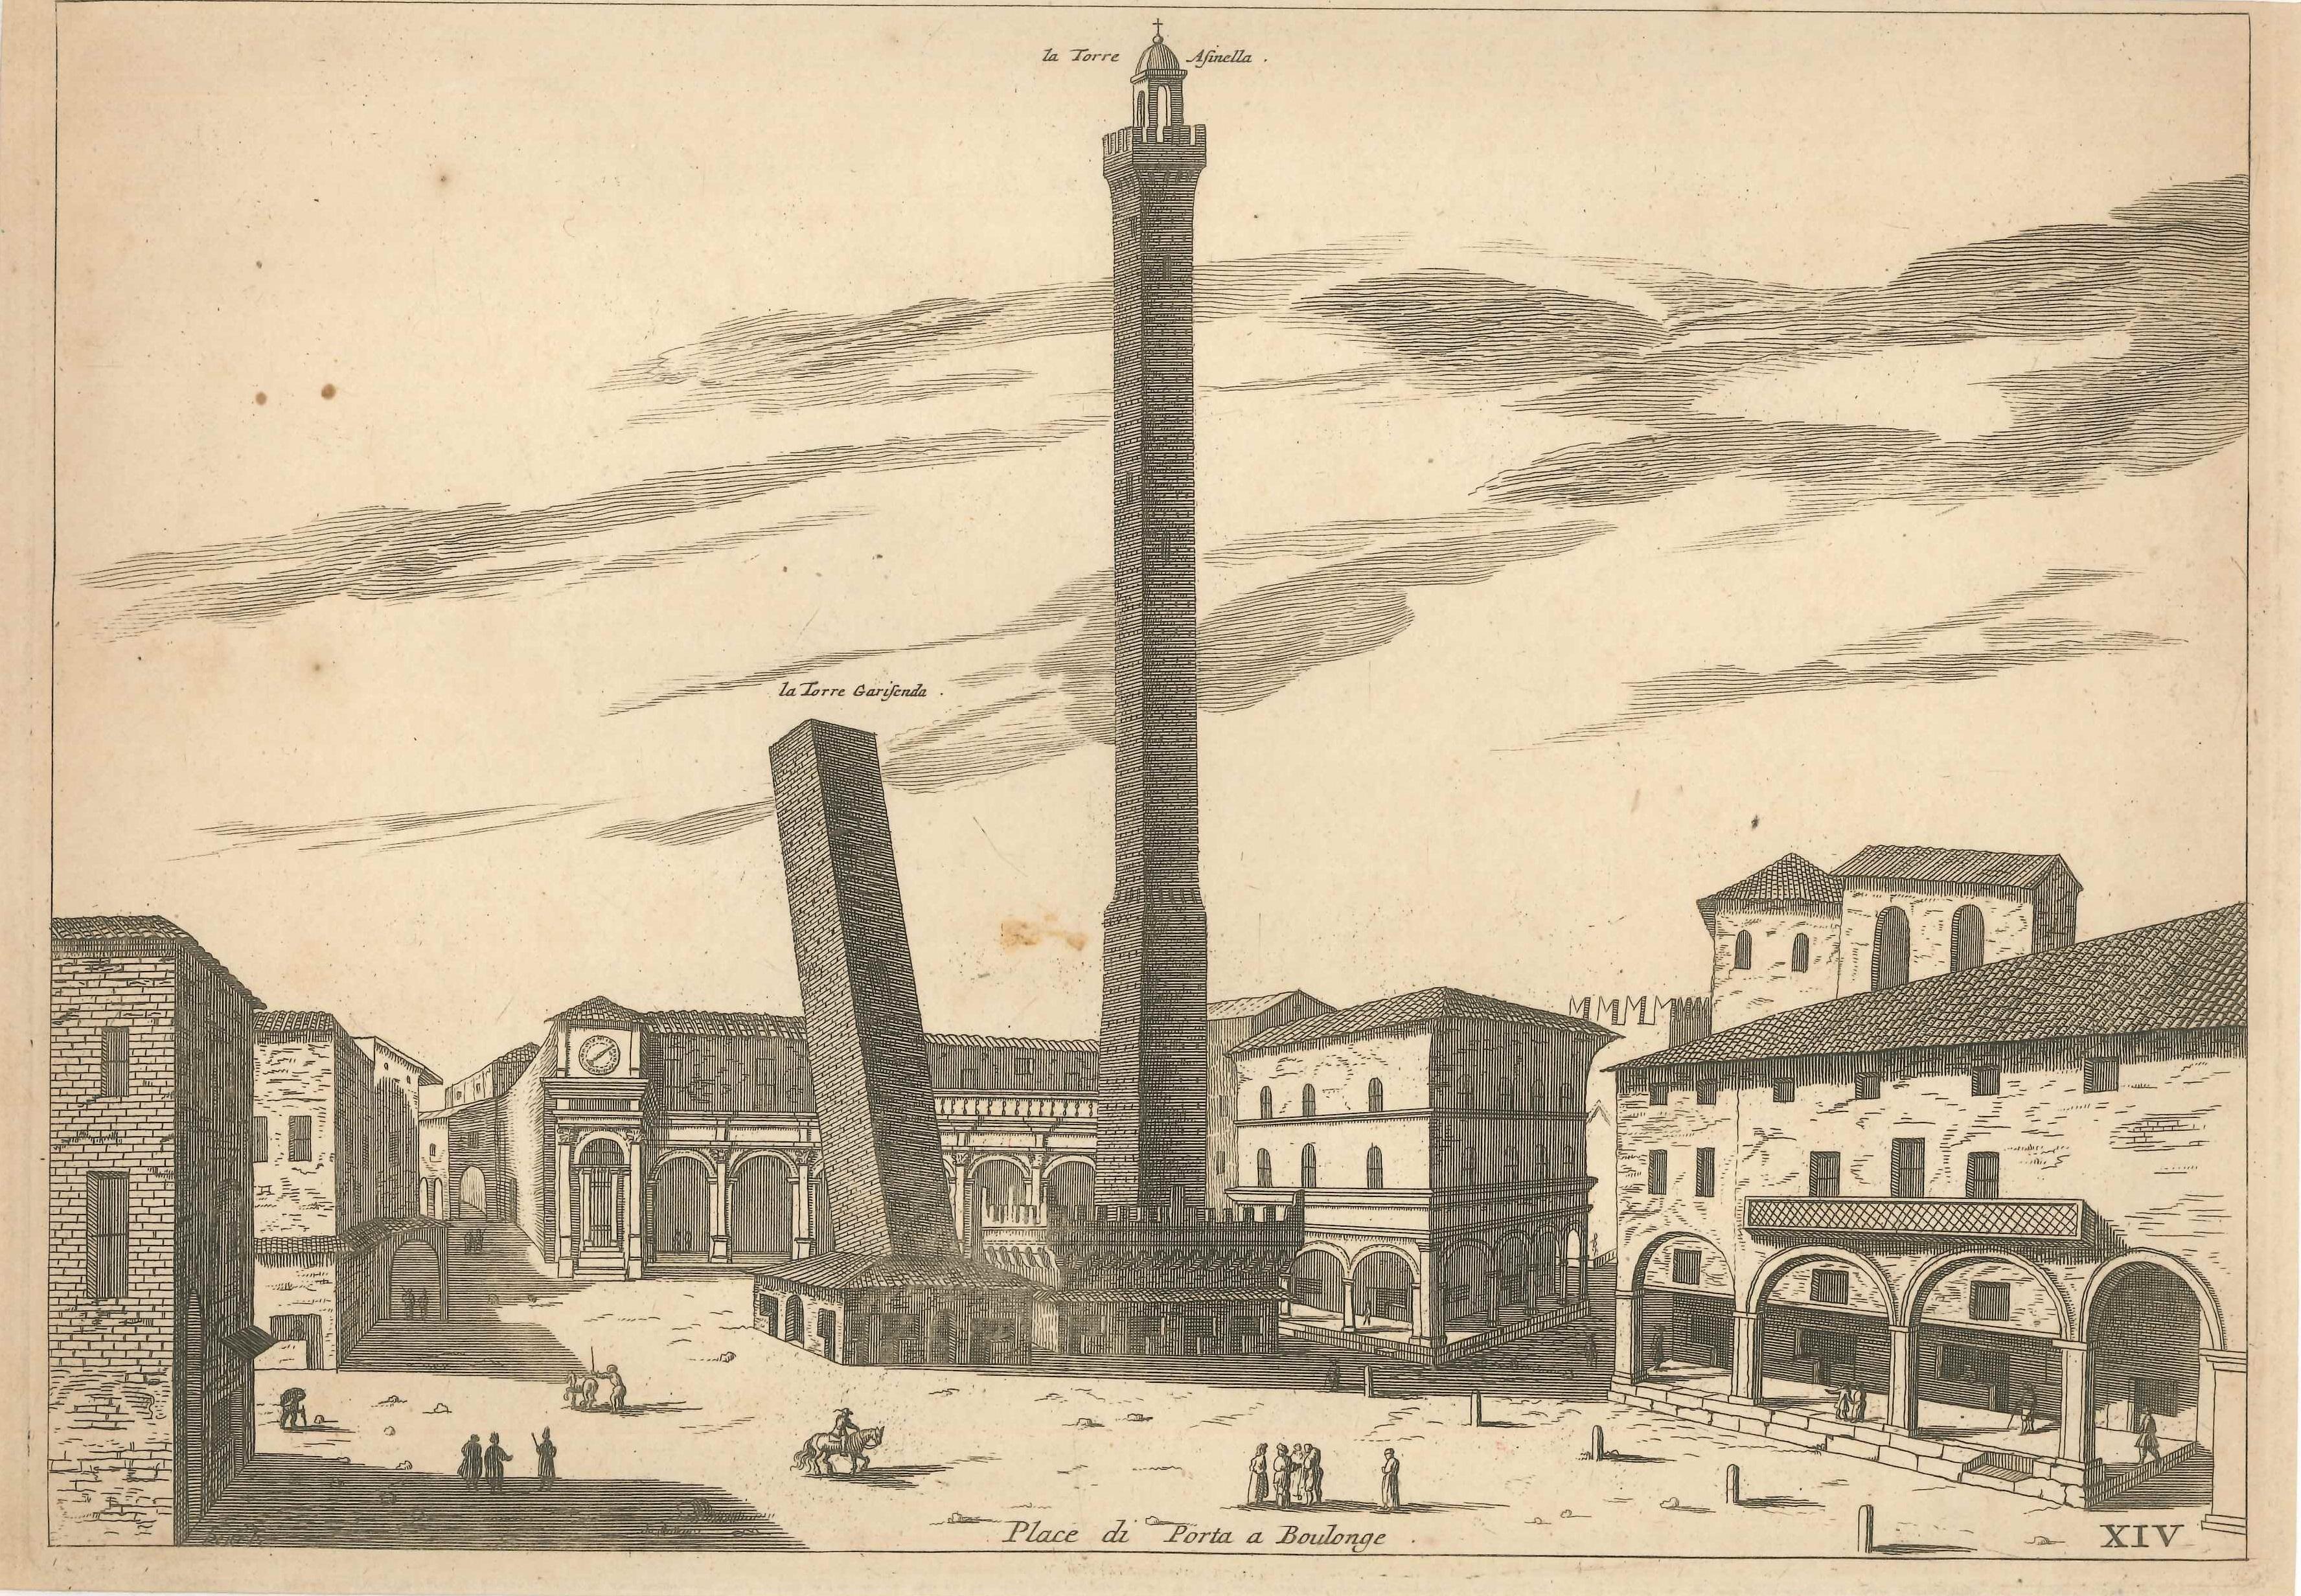 Giovan Battista Falda Figurative Print - Place di Porta a Boulogne -  Original Etching by G.B. Falda